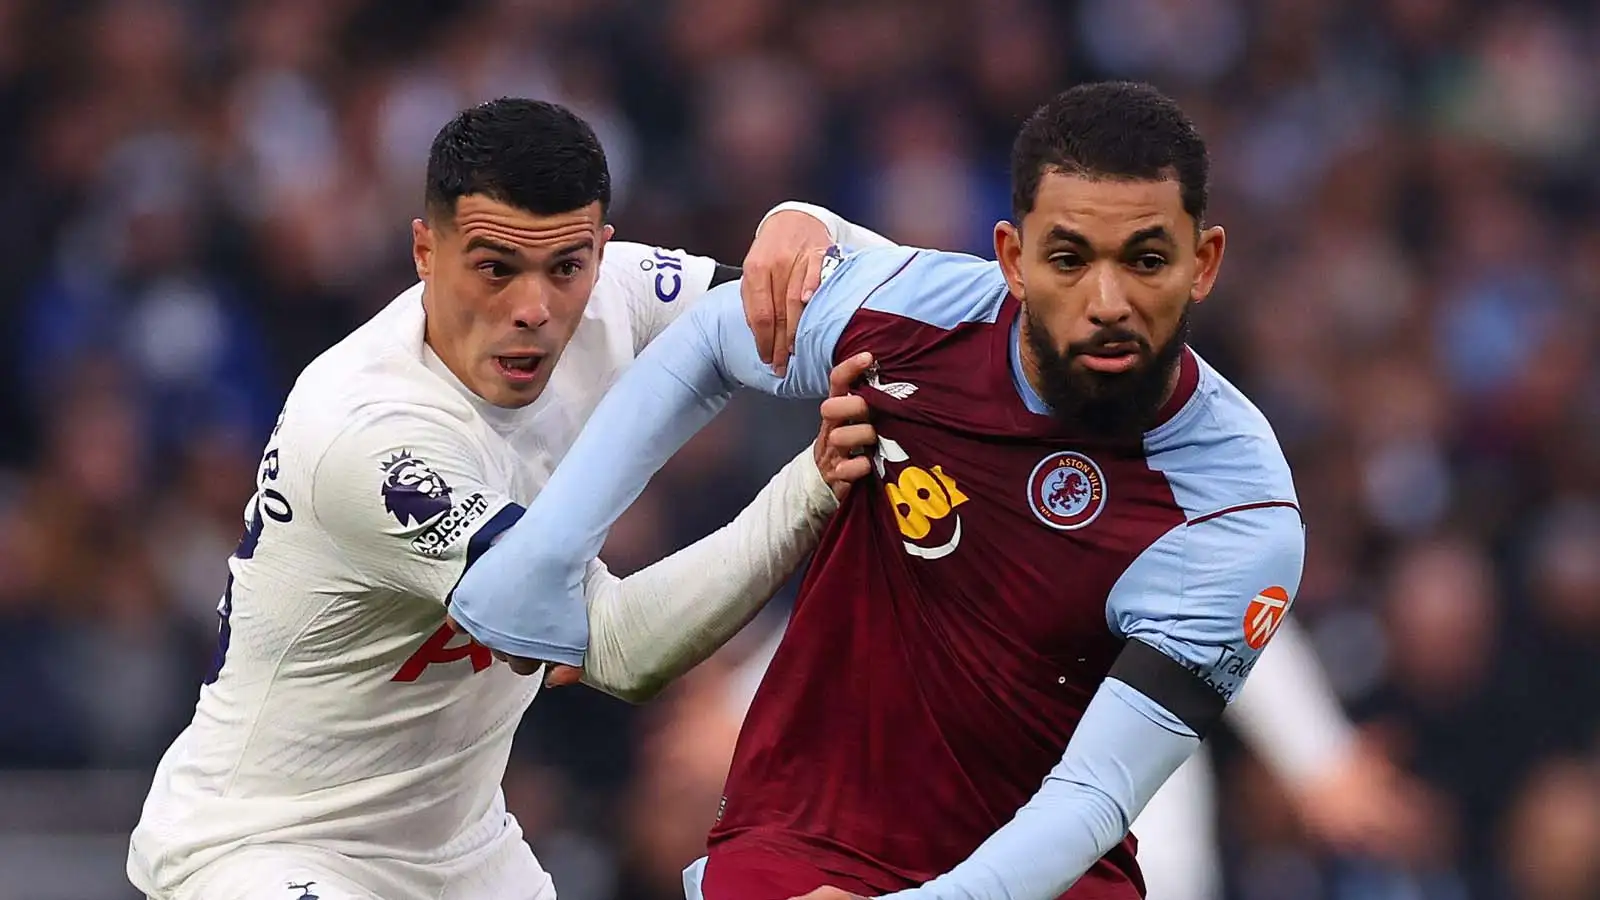 Douglas Luiz of Aston Villa is under pressure from Pedro Porro of Tottenham Hotspur